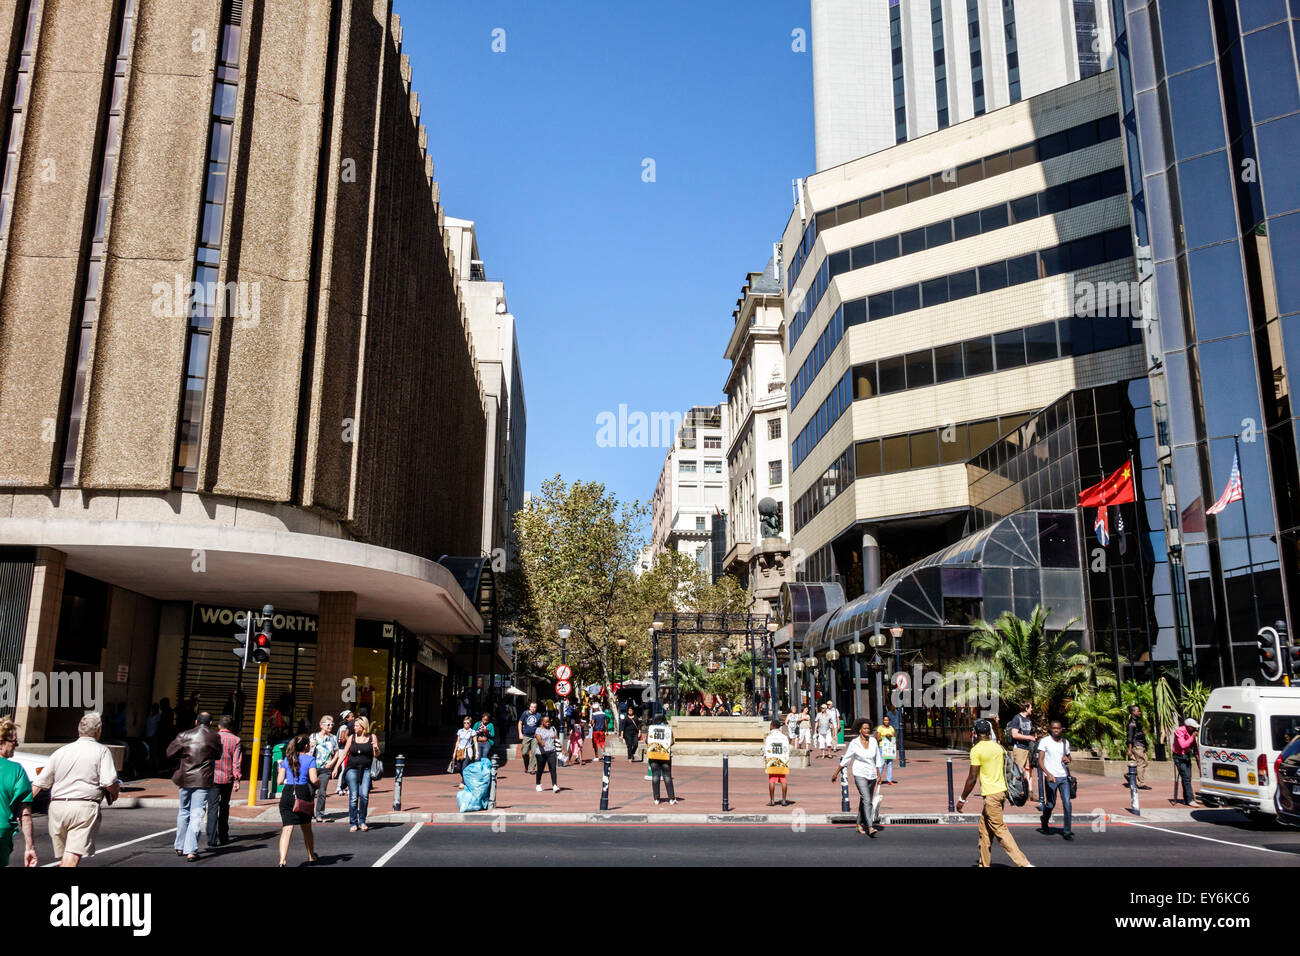 Cape Town South Africa,City Centre,center,Strand Street,St. George's Mall,city skyline,buildings,SAfri150309039 Stock Photo